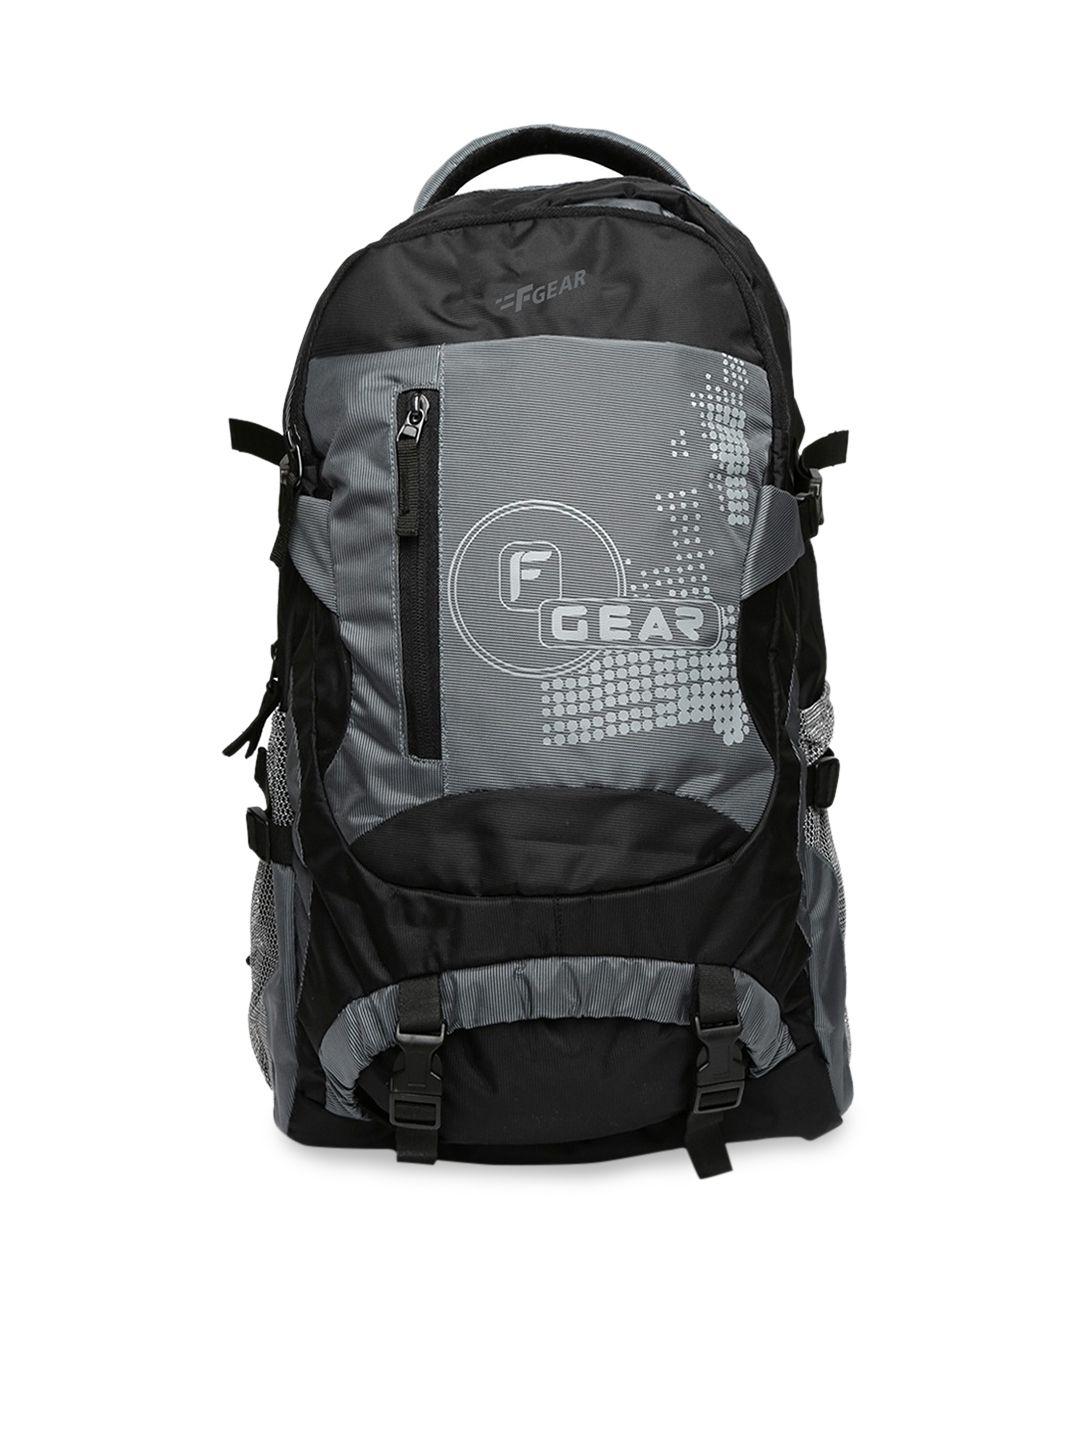 f gear unisex grey & black orion printed backpack